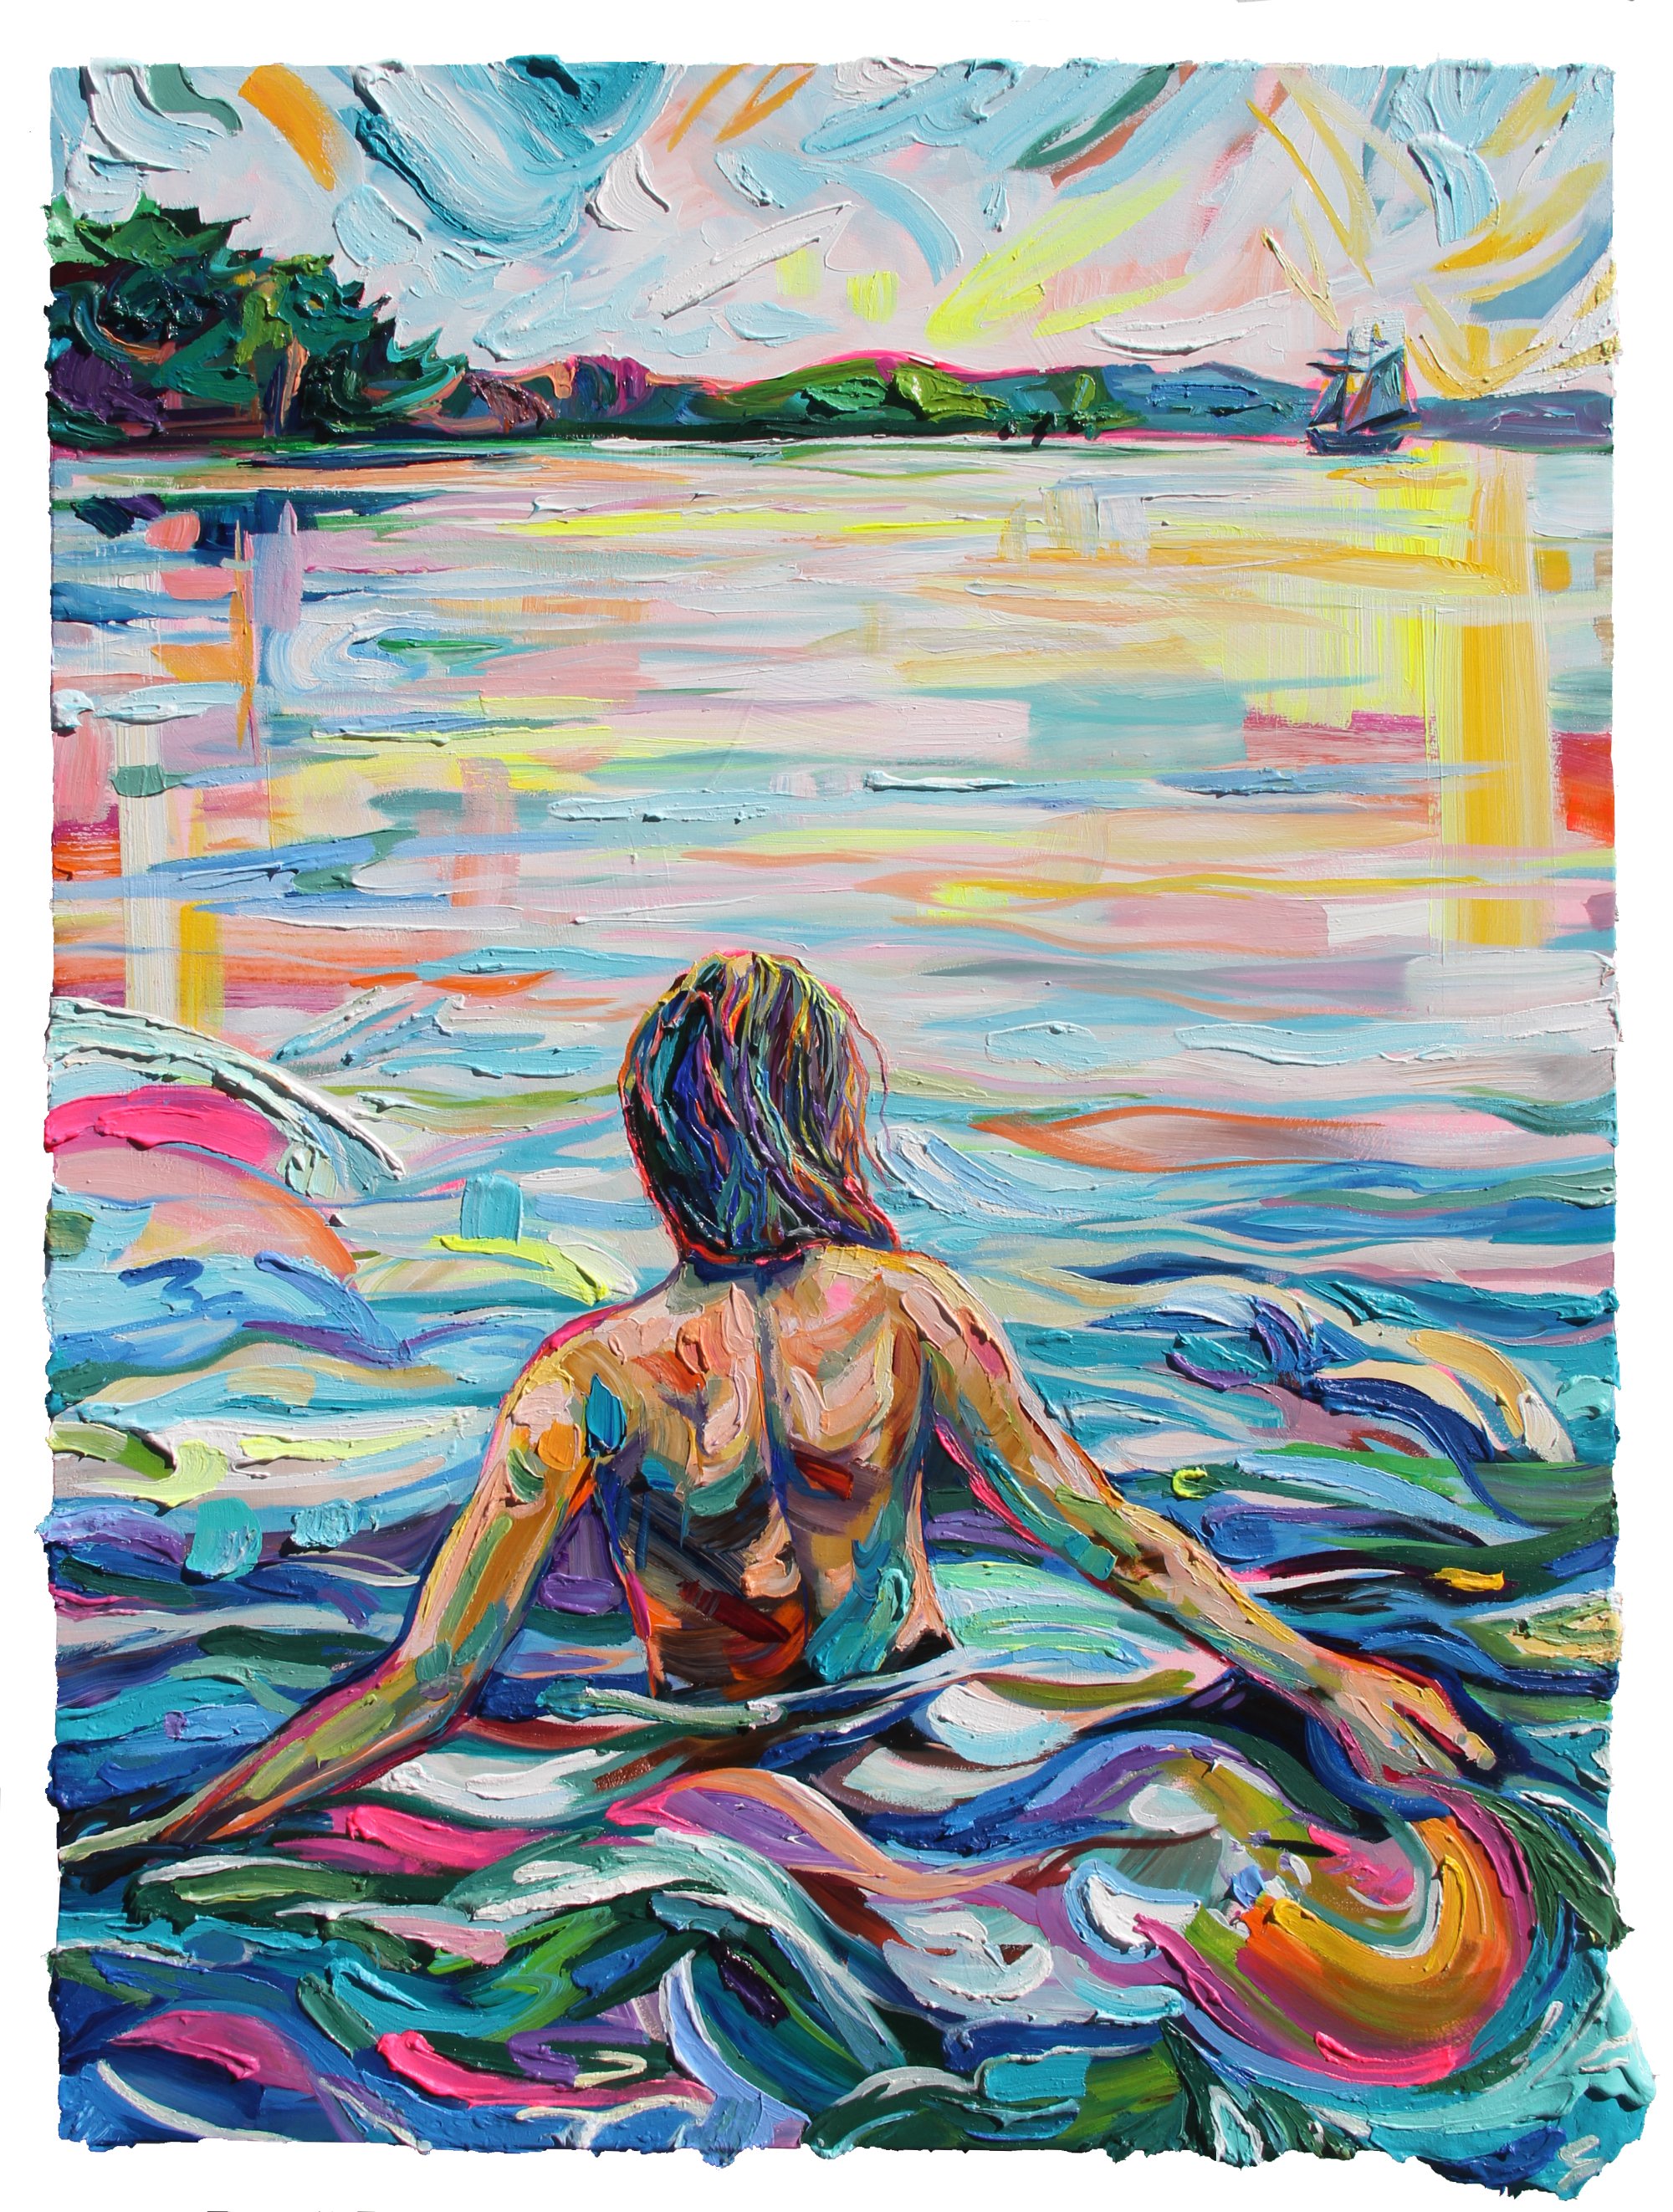 Georgian Bay Mermaid, 40 x 30”, oil and acrylic on panel, 2022.